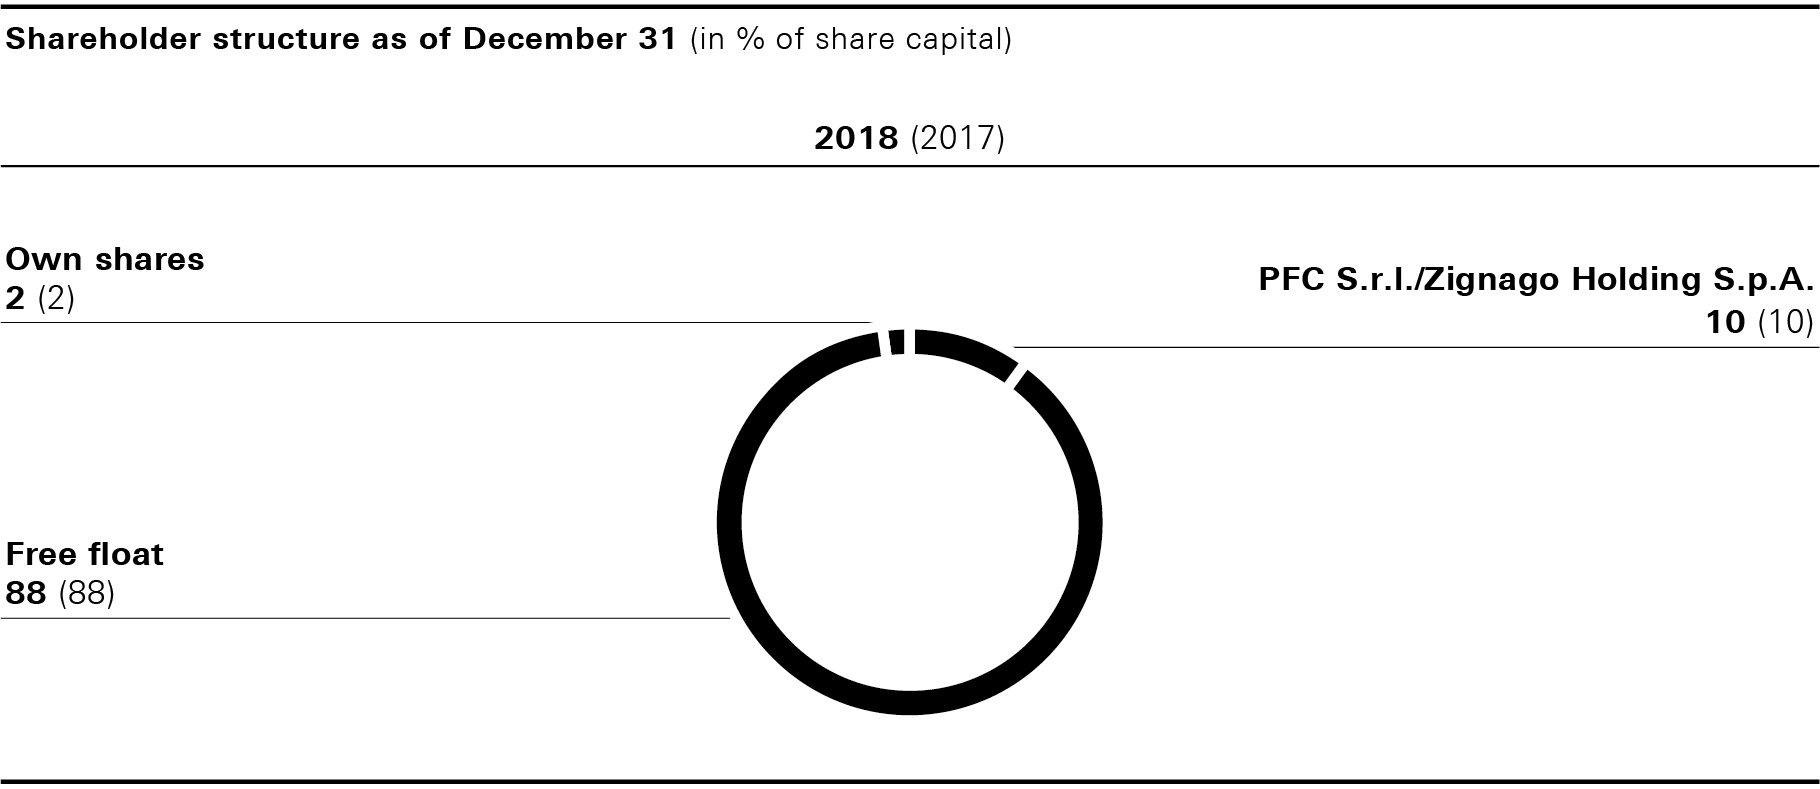 Shareholder structure as of December 31 (pie chart)